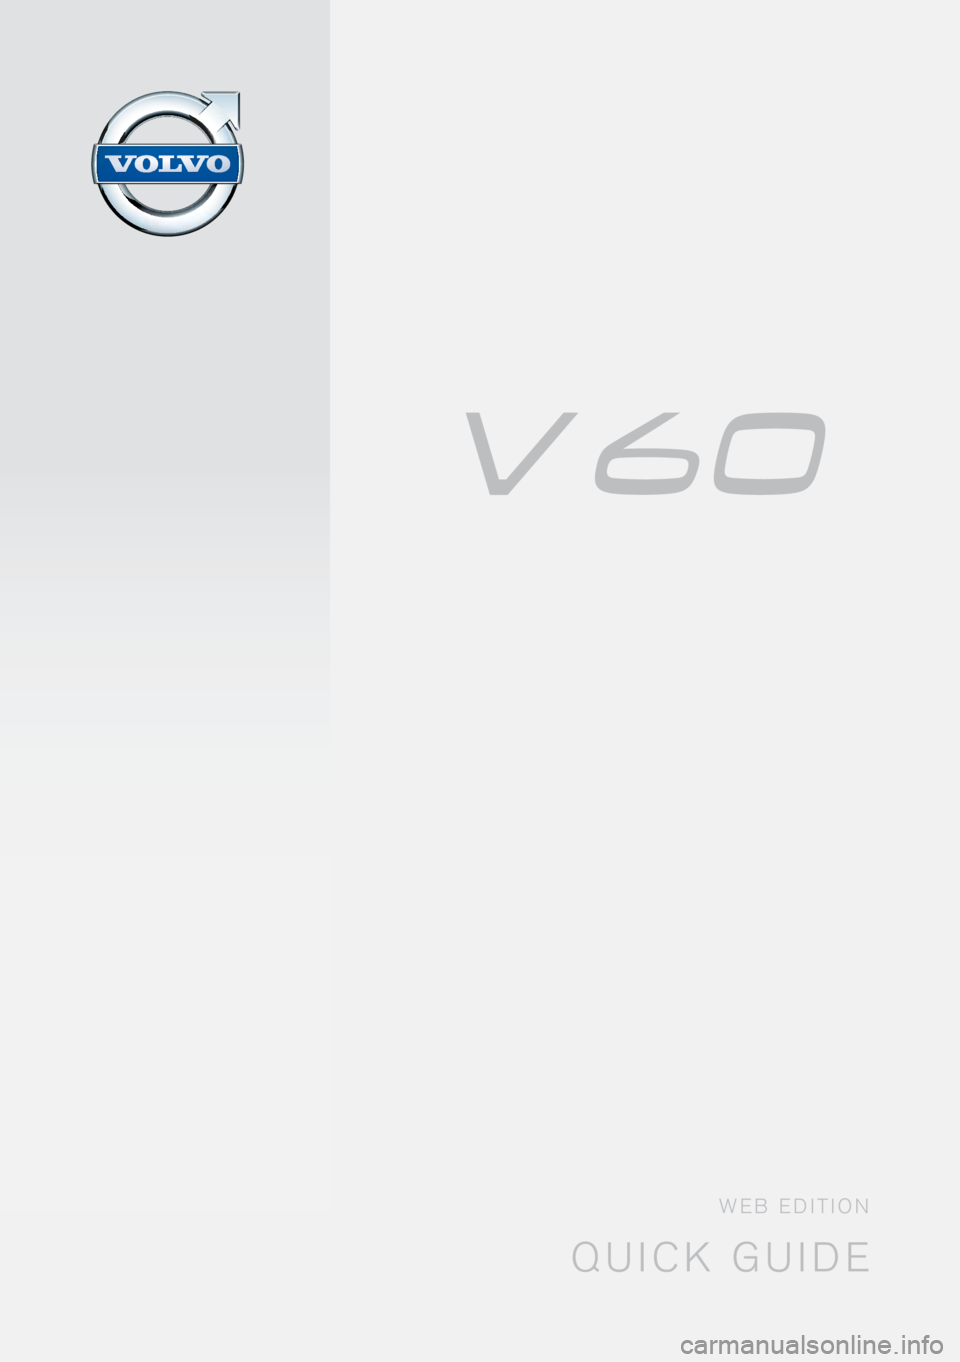 VOLVO V60 2015  Quick Guide 